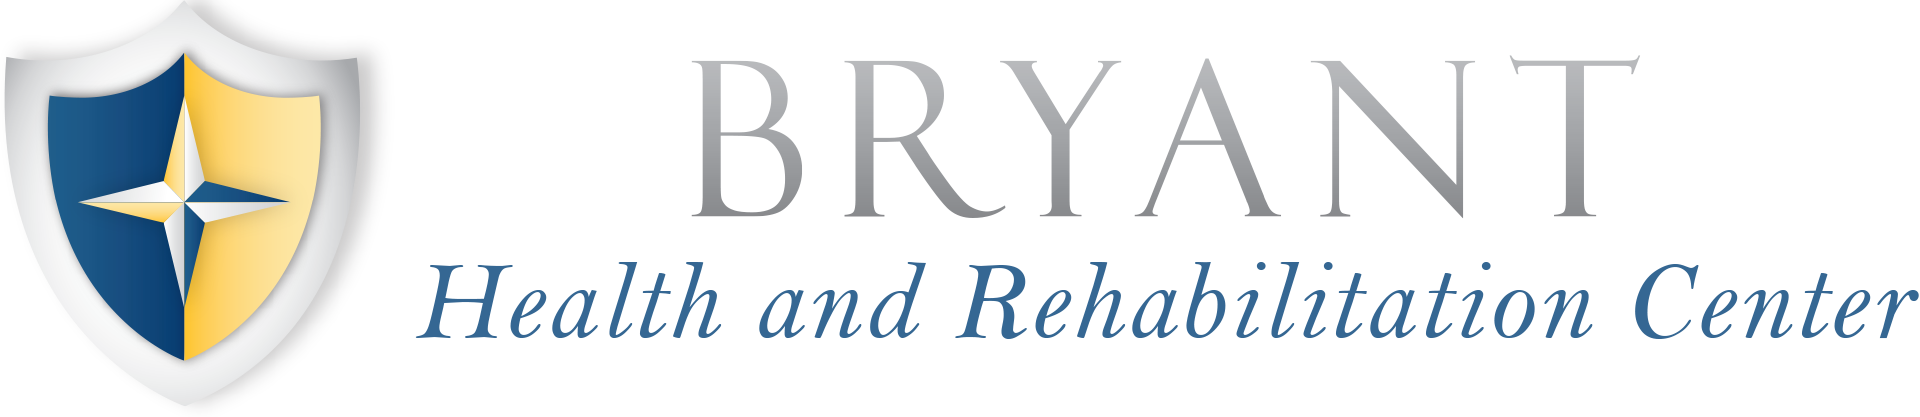 Bryant Health and Rehabilitation Center